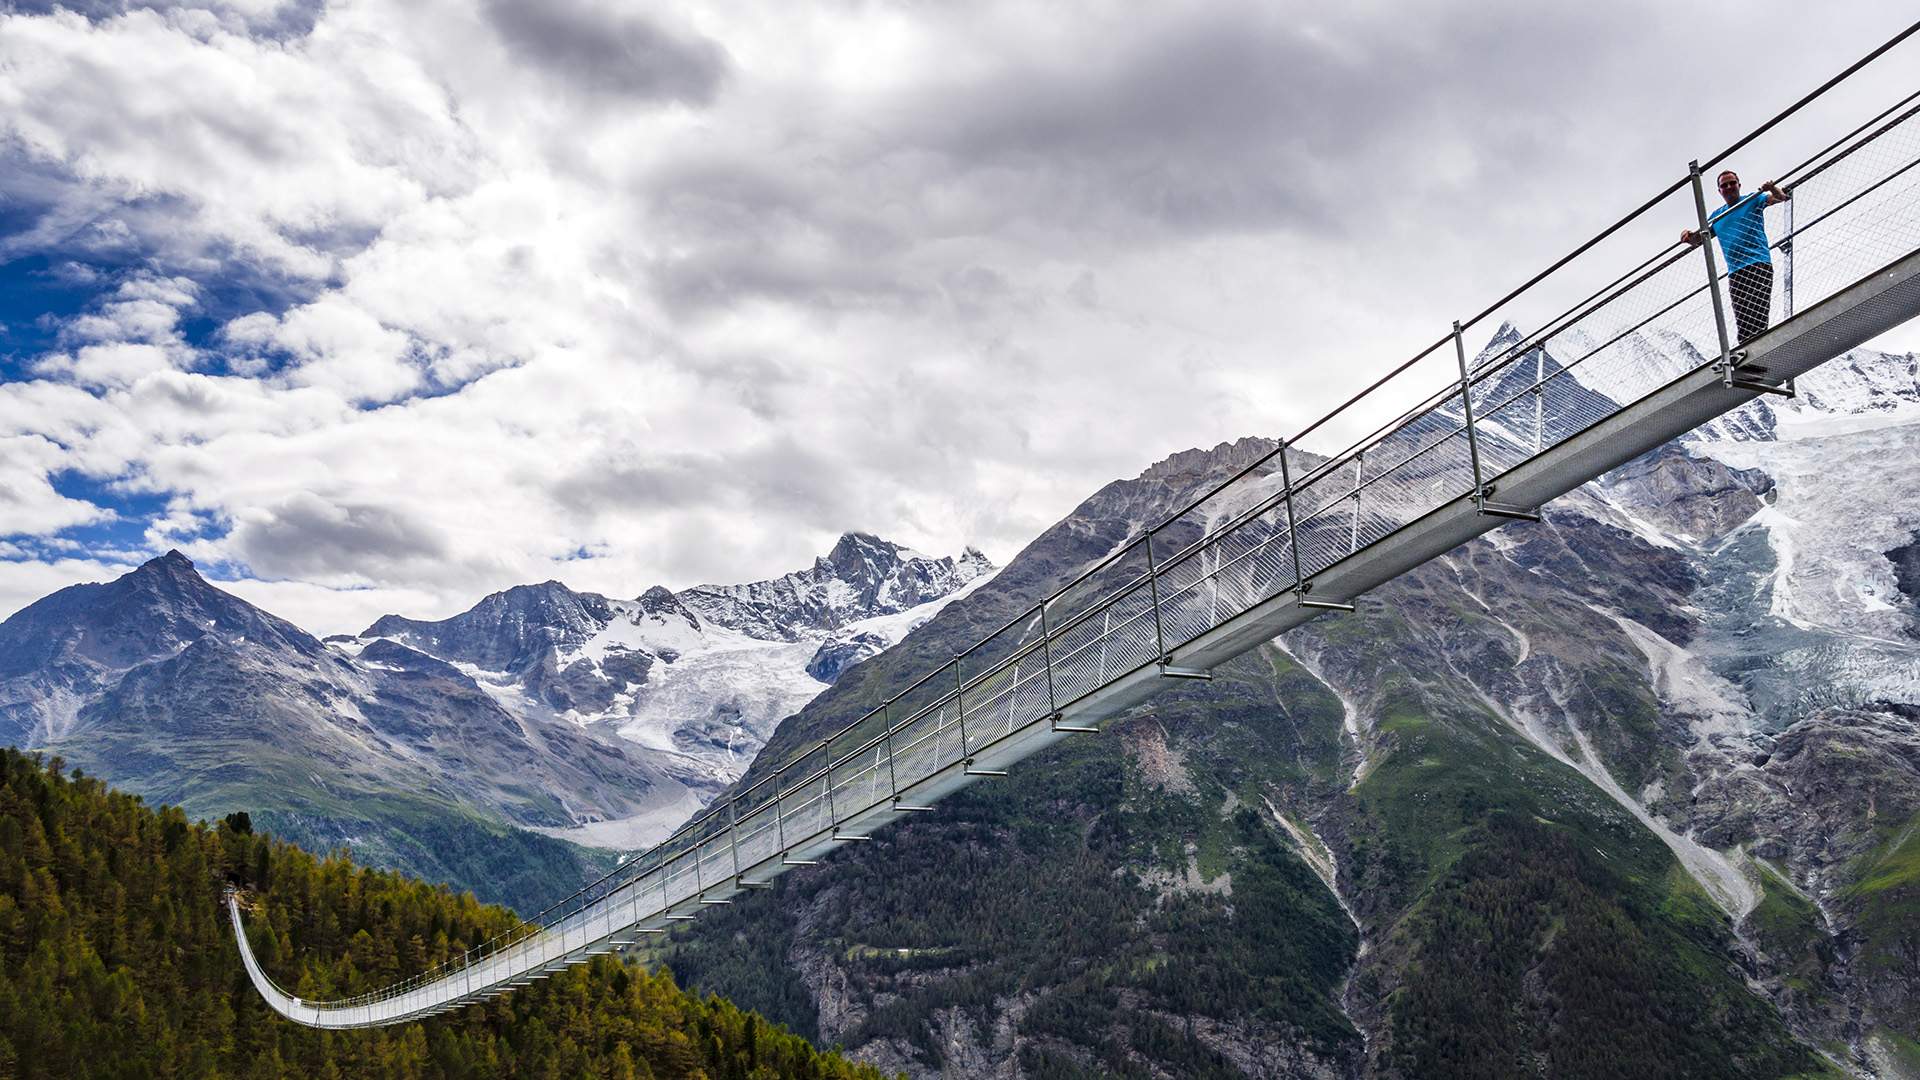 The World's Longest Suspension Bridge Has Opened in the Swiss Alps